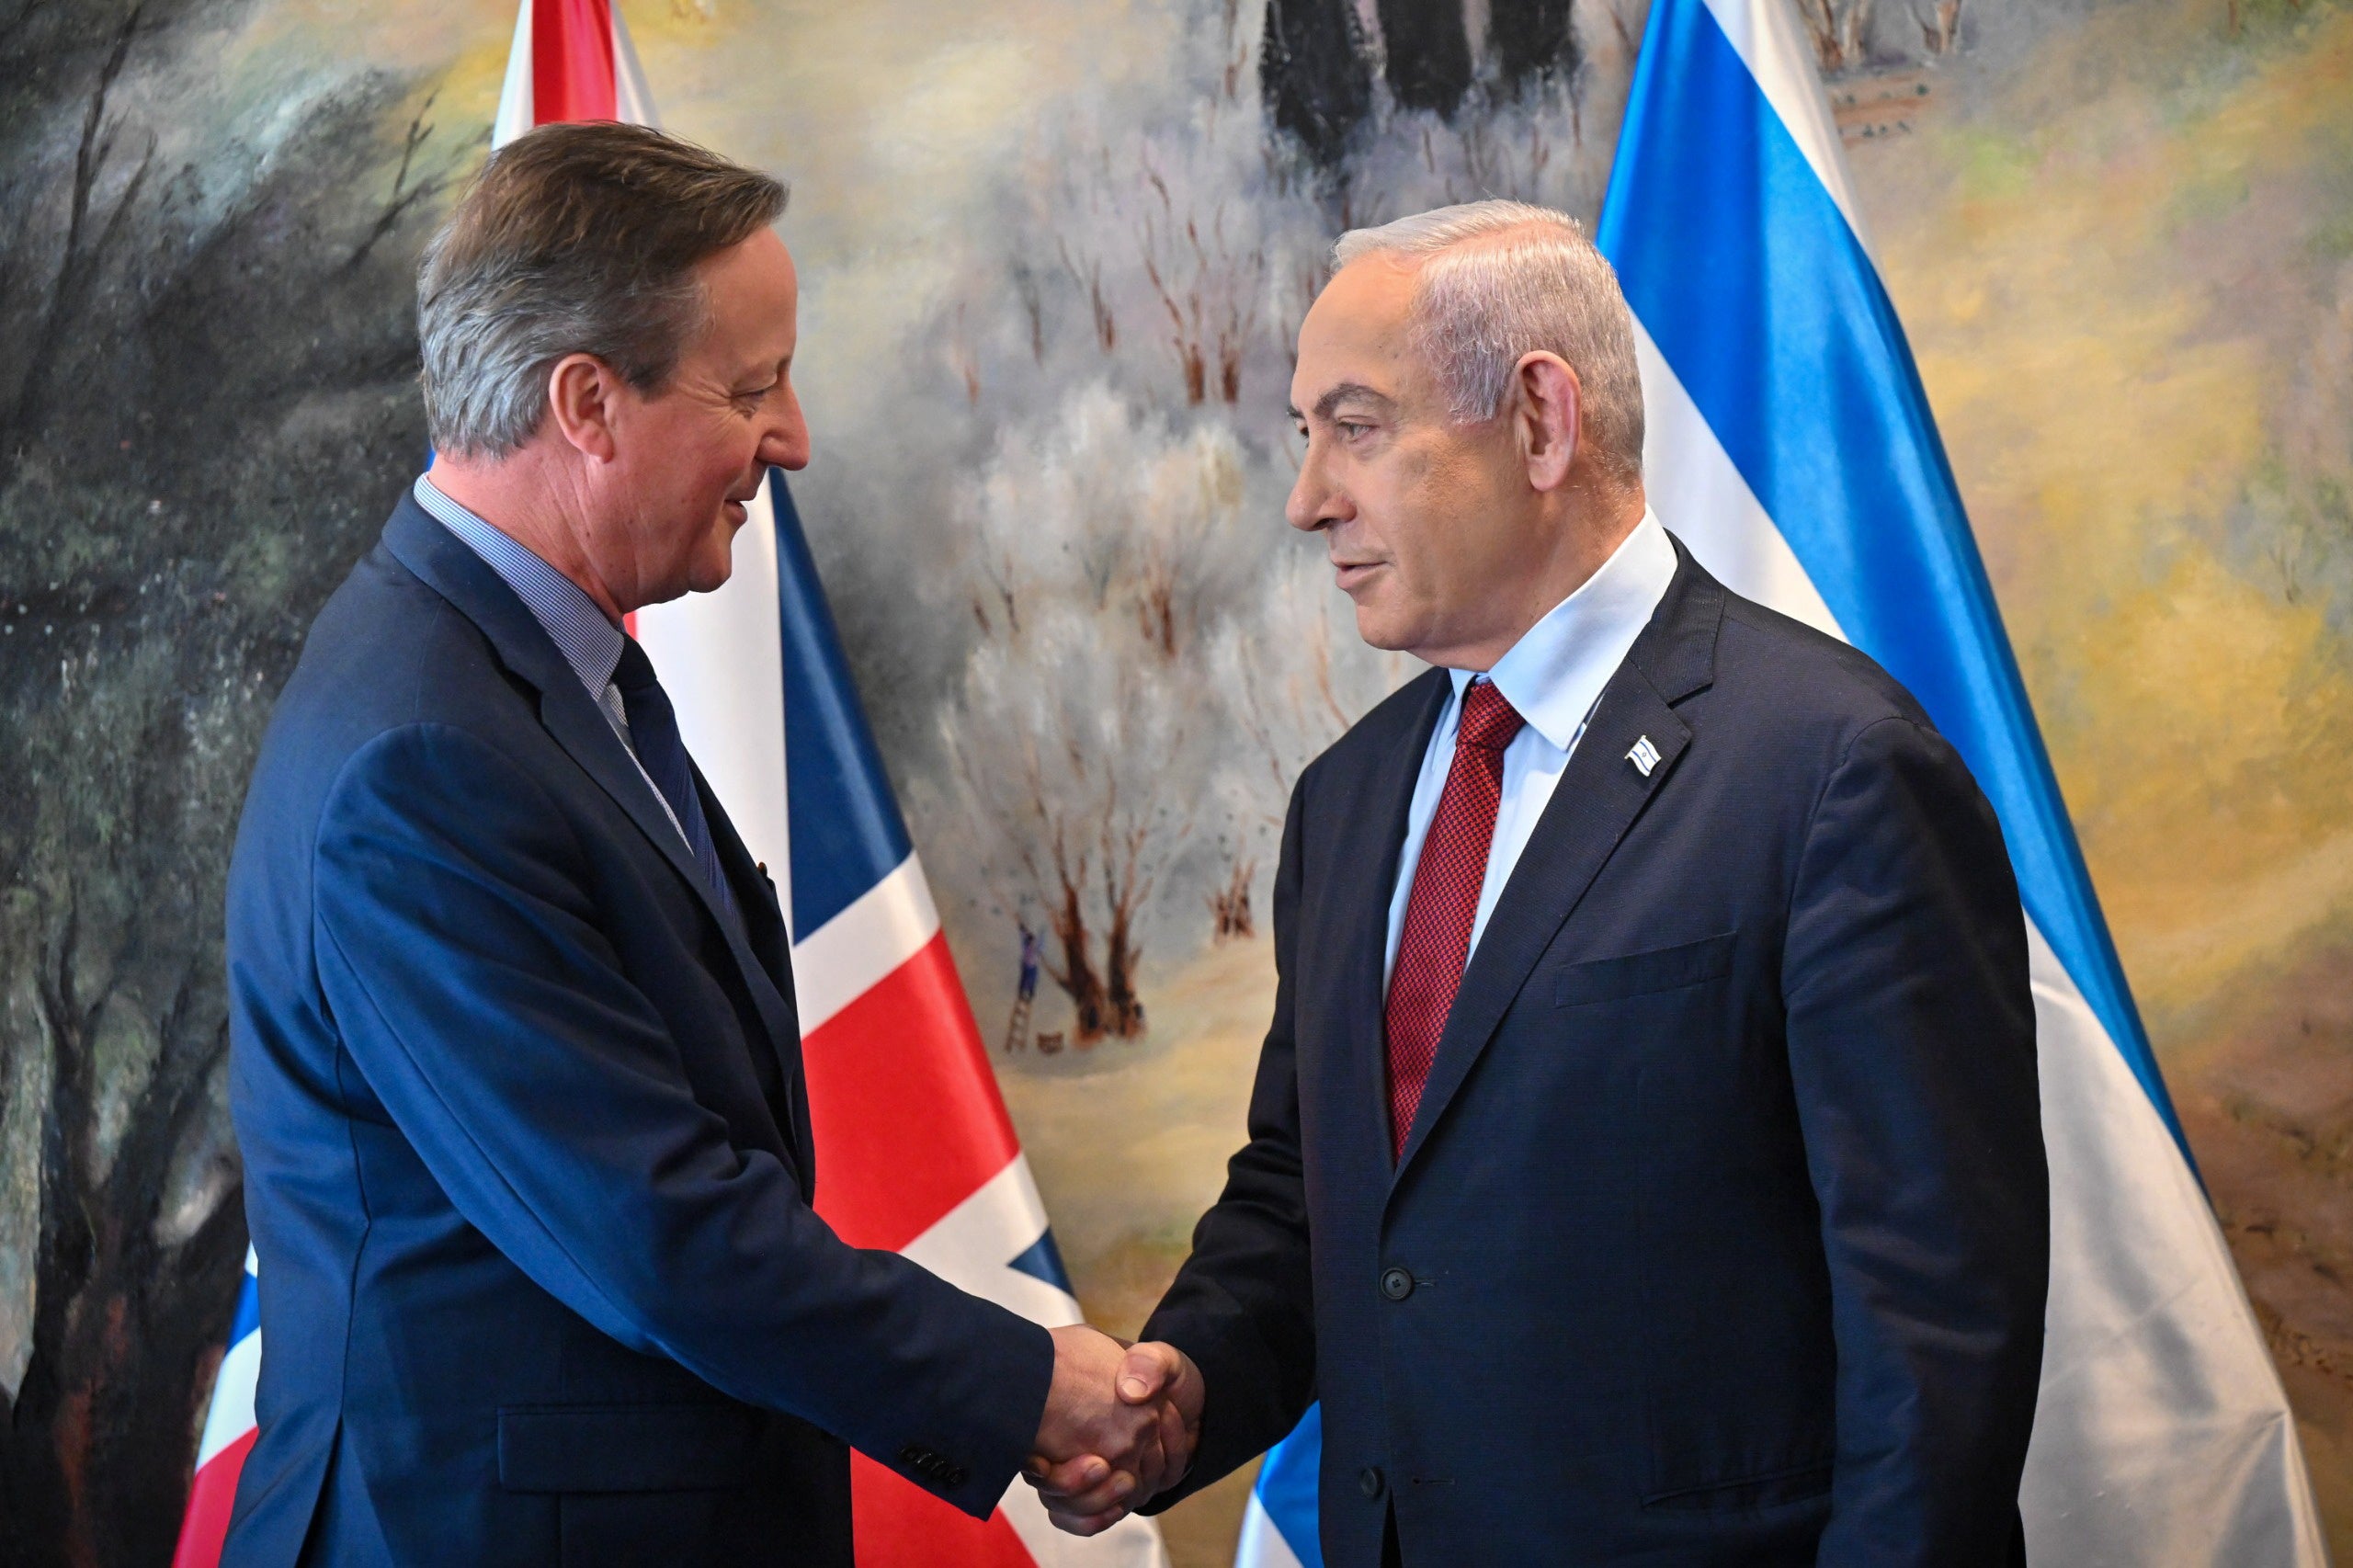 David Cameron met Israeli PM Benjamin Netanyahu in Israel on Thursday